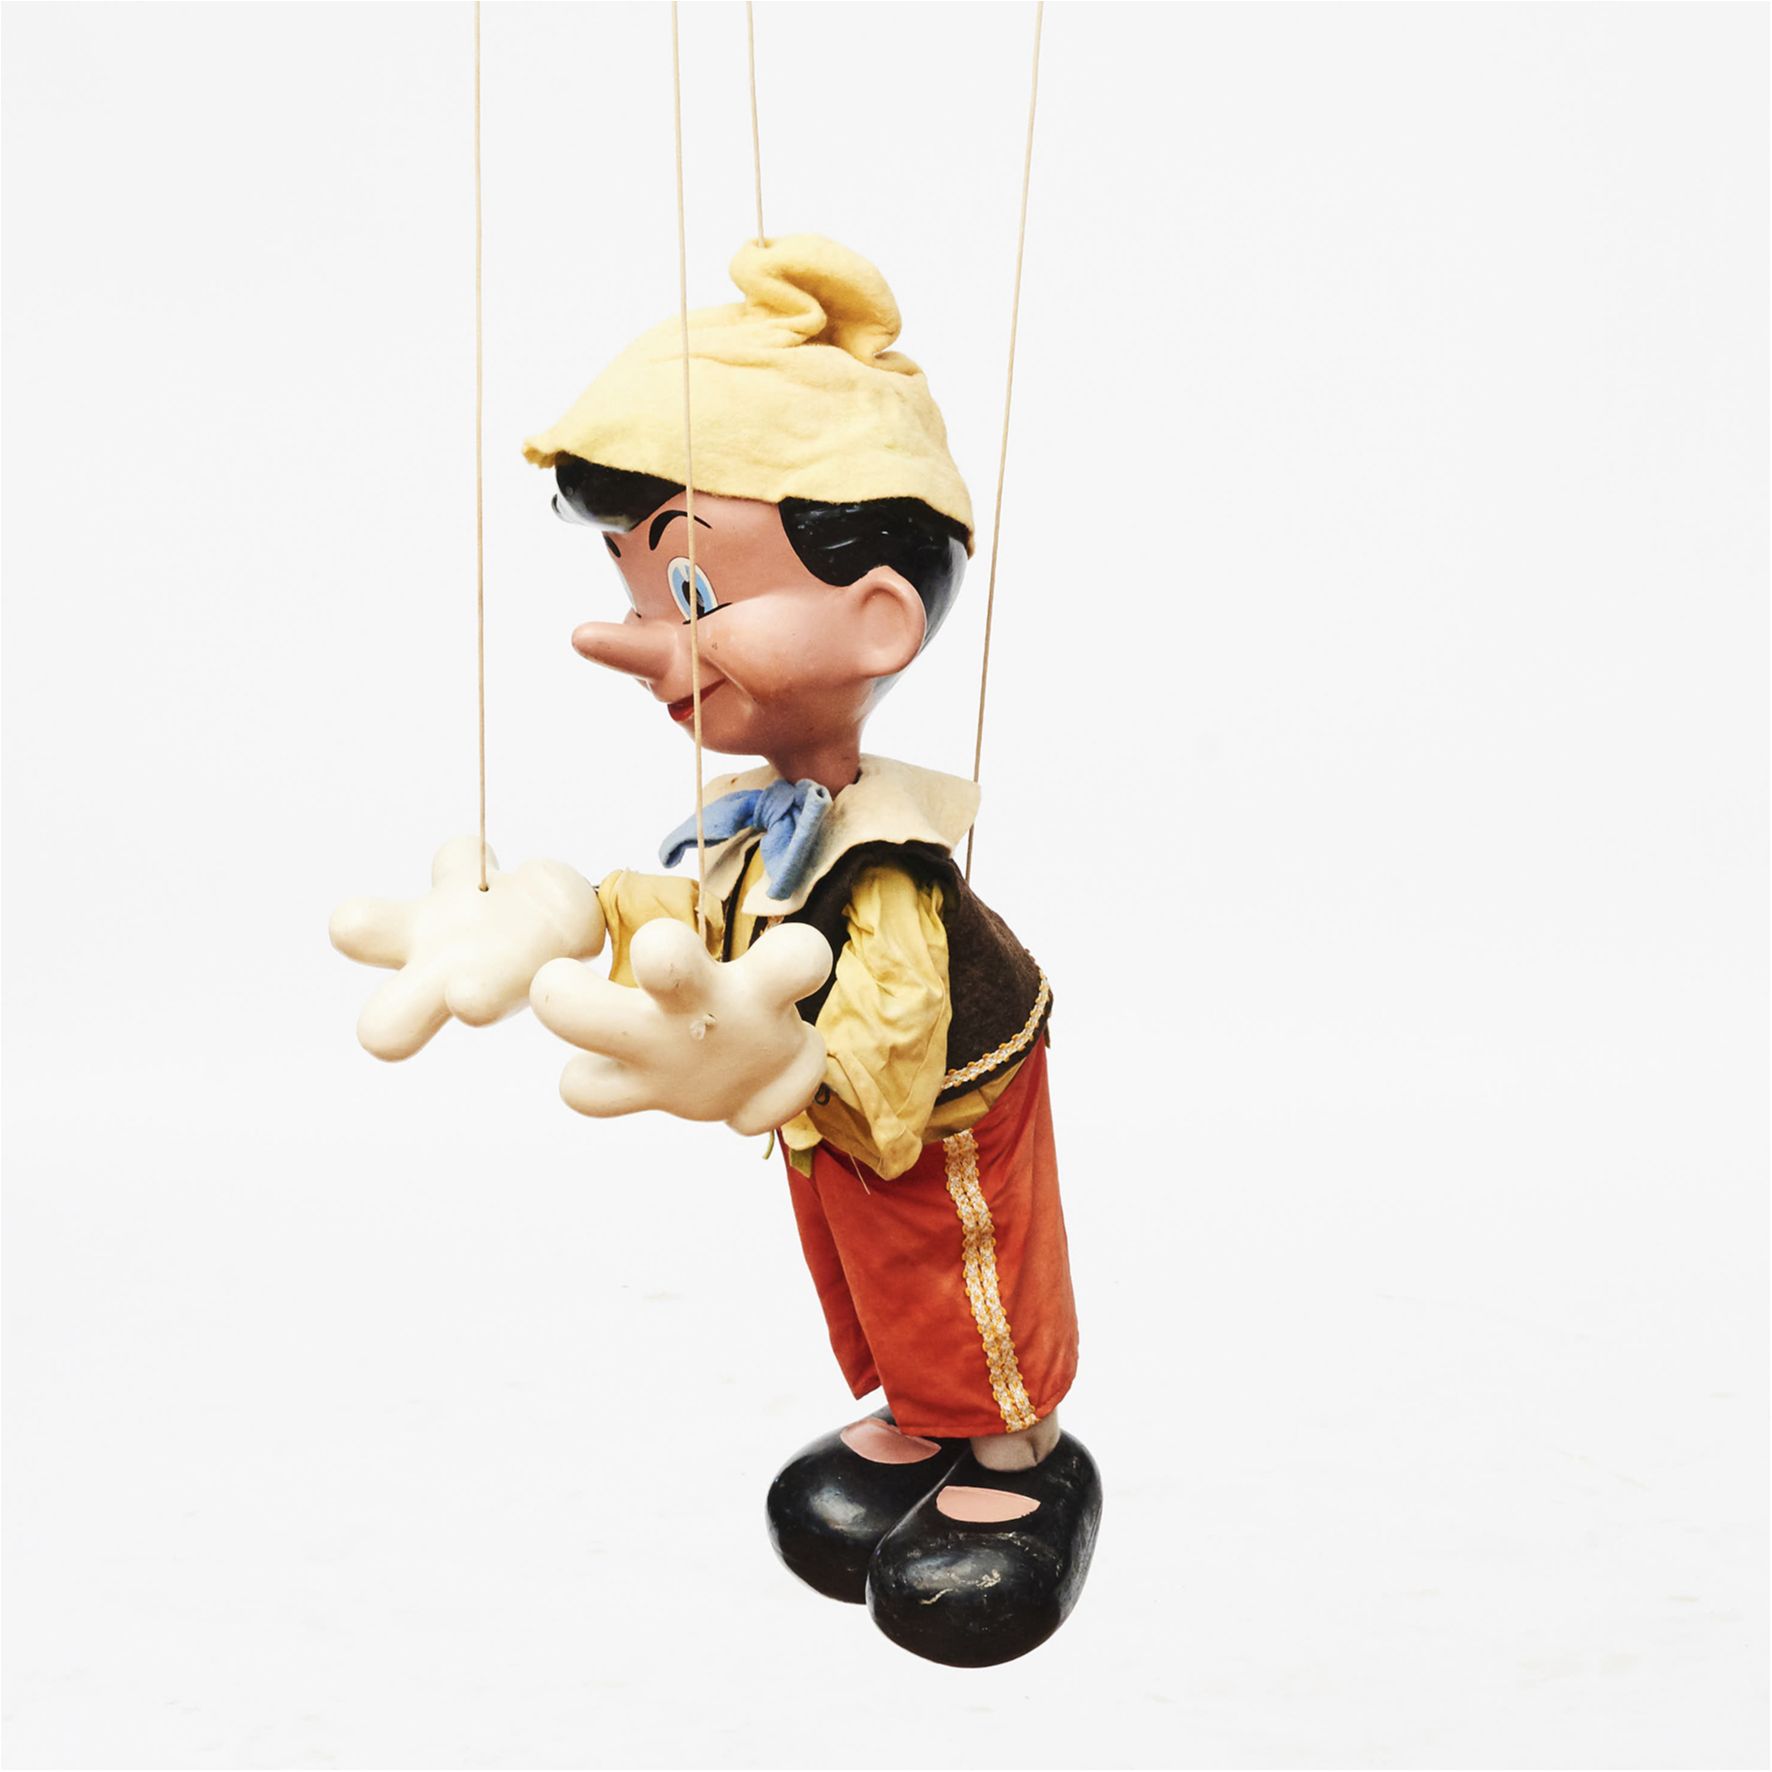 Amazing marionette of Pinocchio in retro style